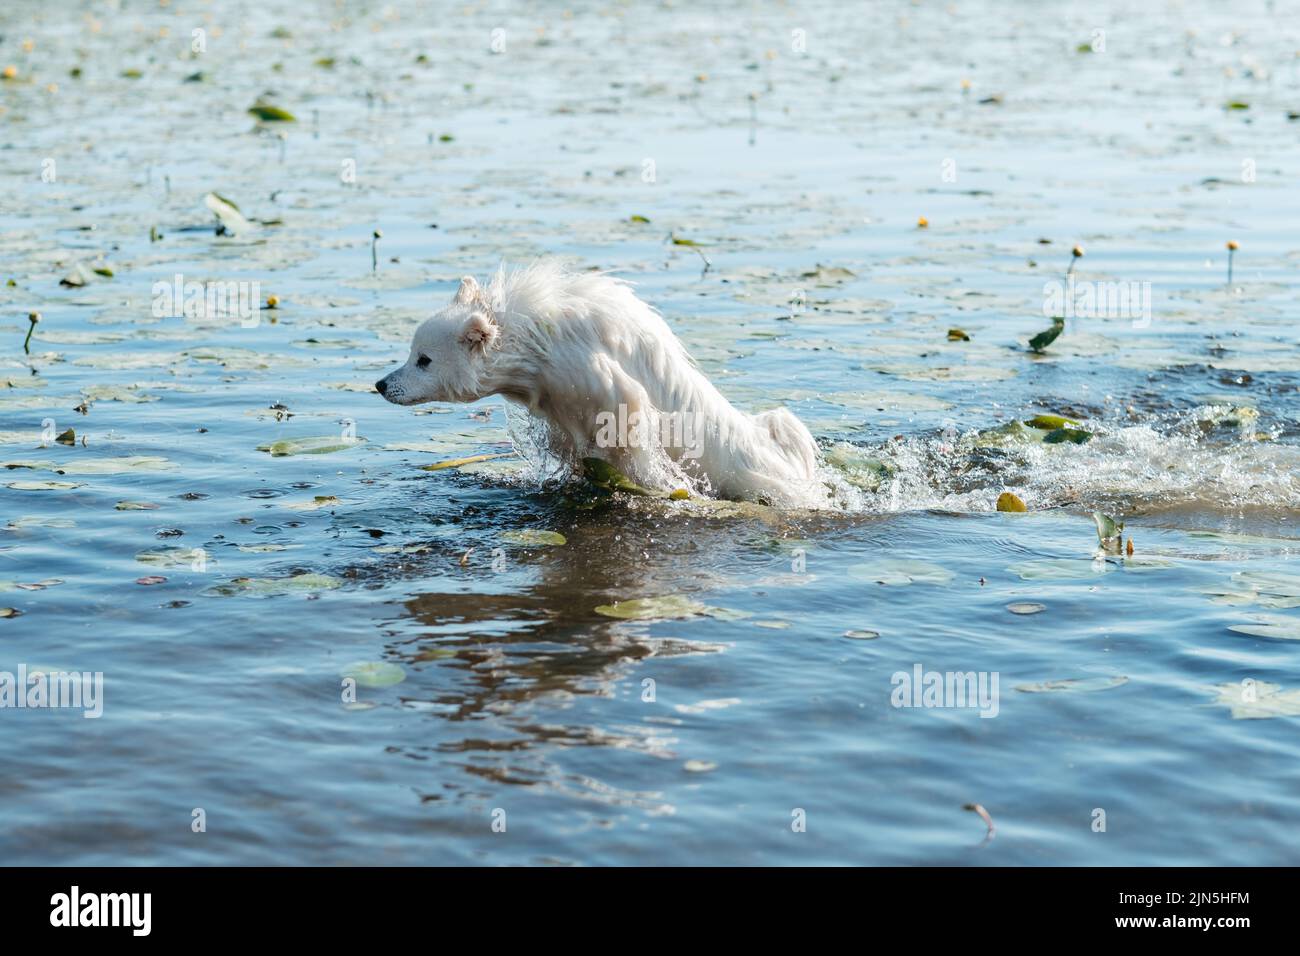 Snow-White Dog Breed Japanischer Spitz Jumping in the Lake Among Water Flower Stockfoto